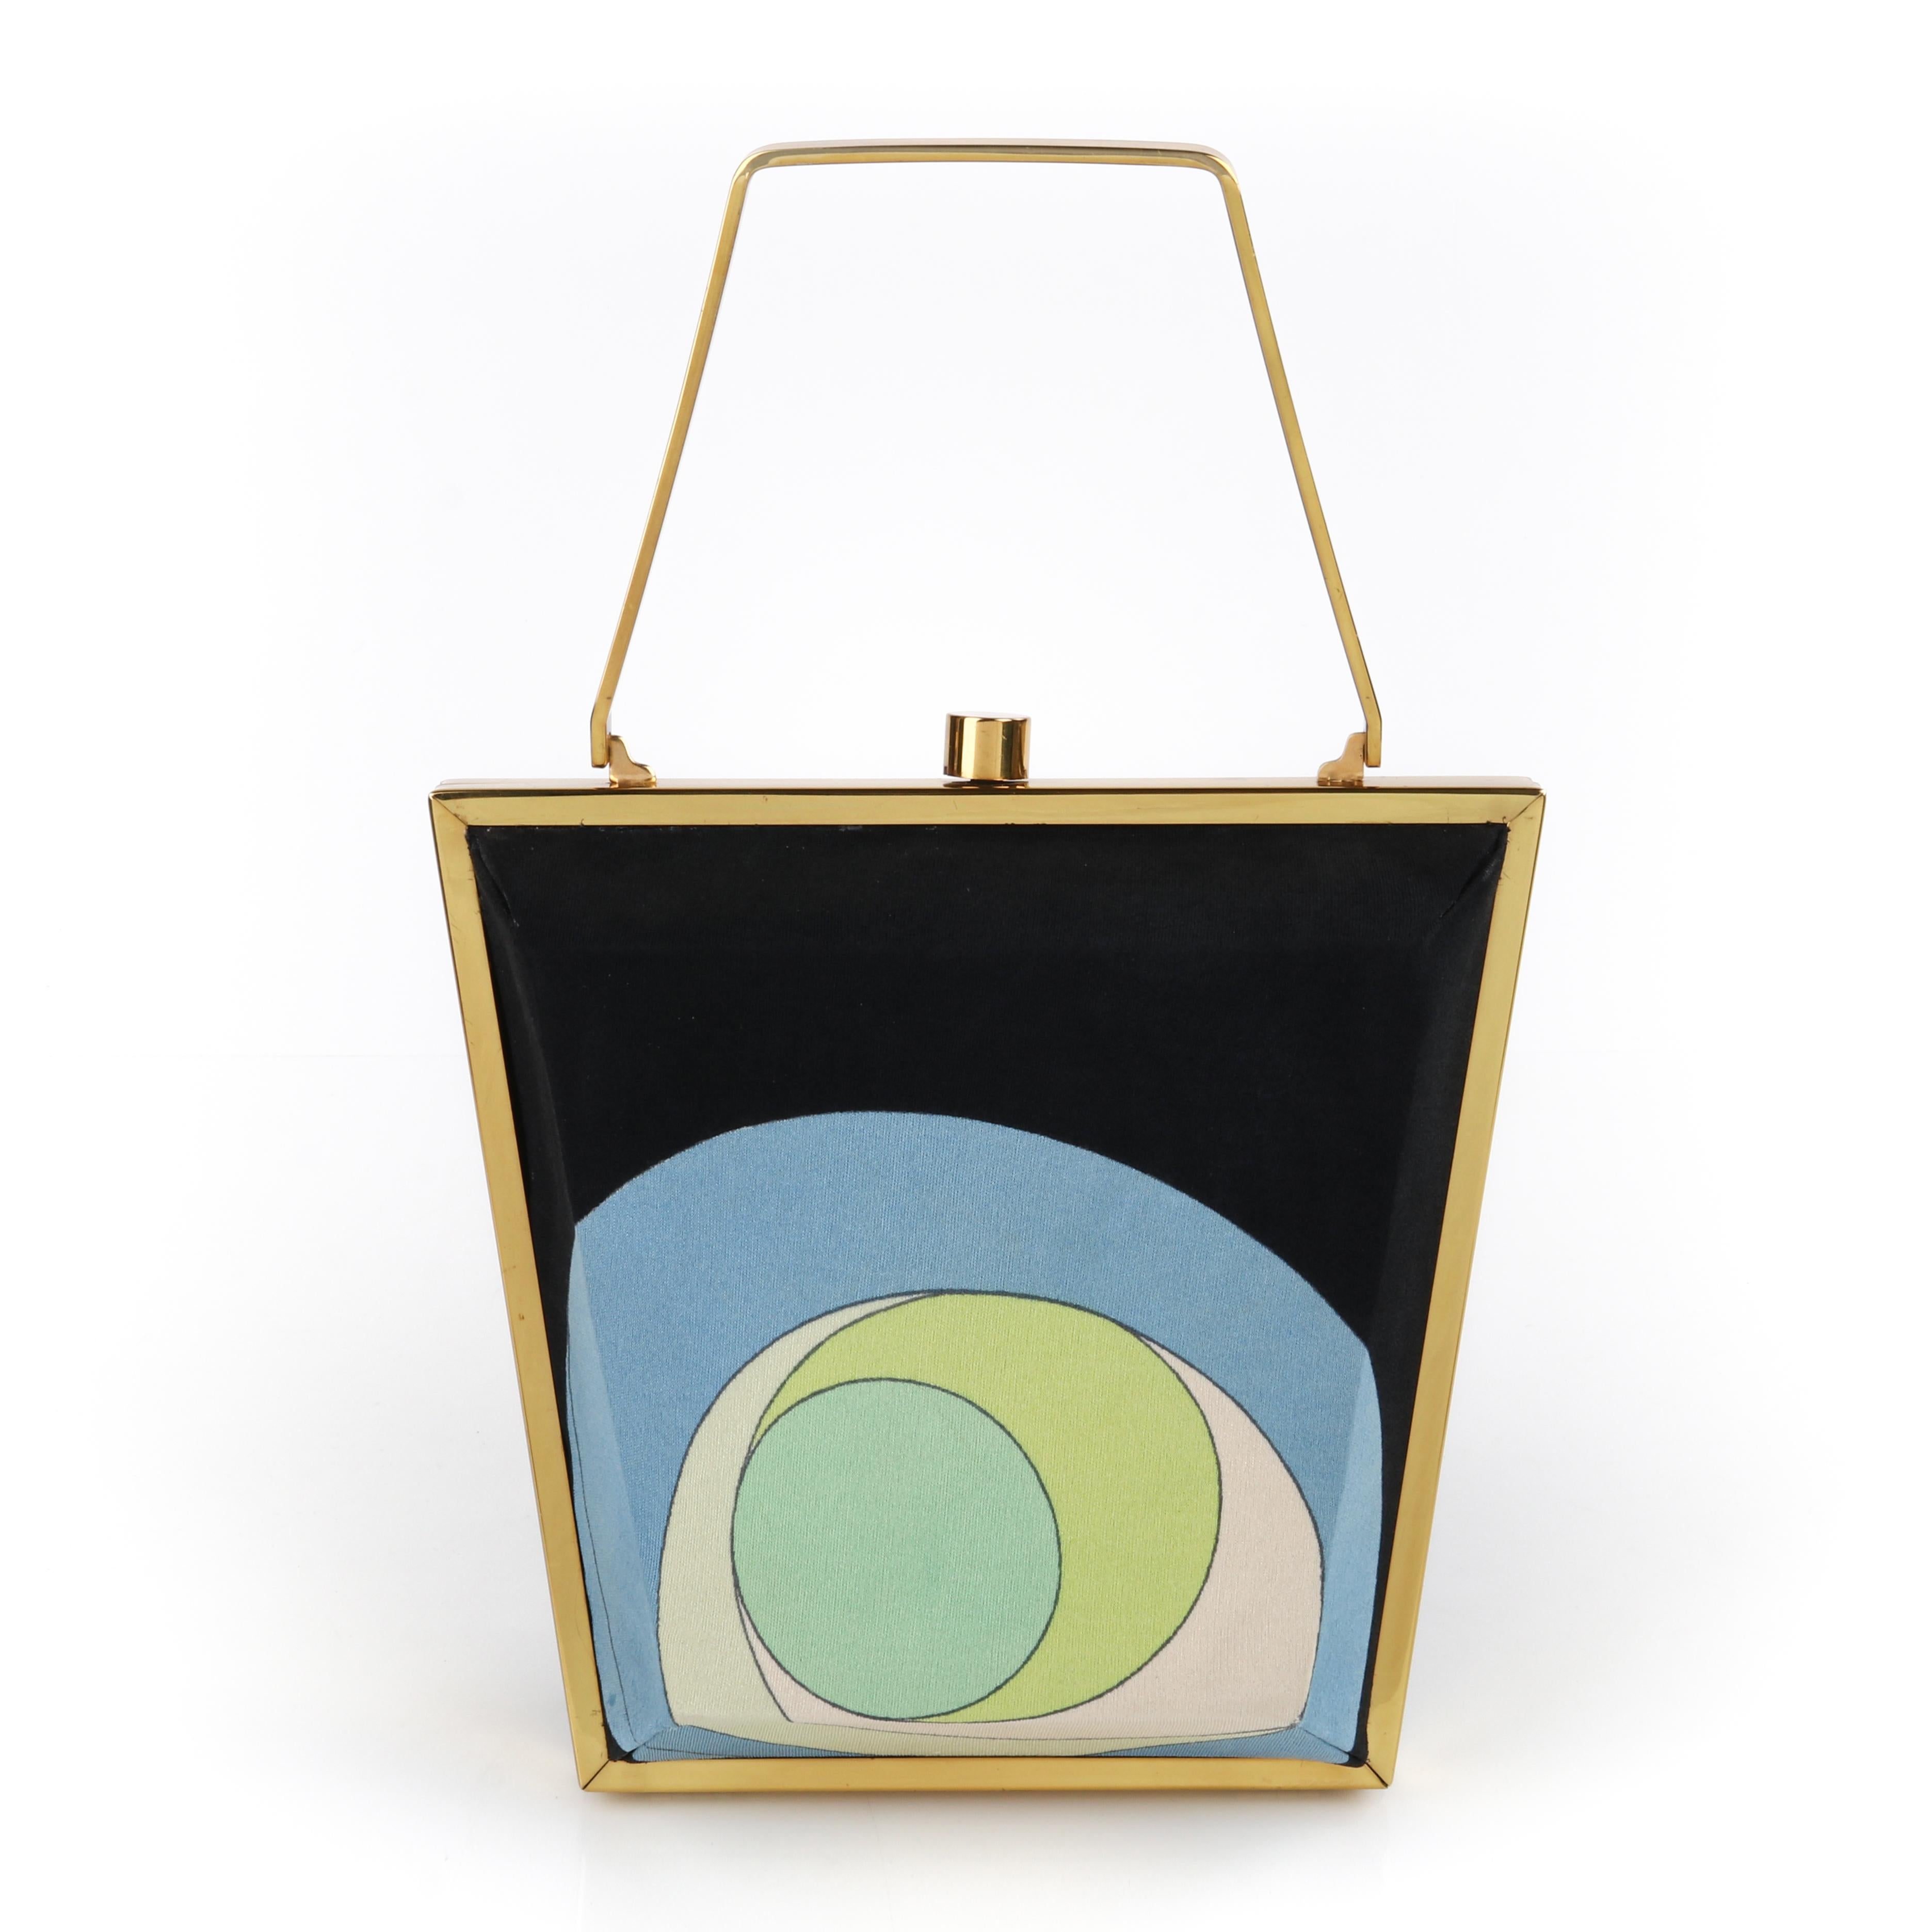 EMILIO PUCCI c.1960s Multicolor Signature Op Art Structured Silk Metal Box Purse
 
Brand/Manufacturer: Emilio Pucci 
Circa: 1960s
Designer: Emilio Pucci
Style: Box purse
Color(s): Shades of blue, green, white, purple, black; Hardware: gold
Lined: